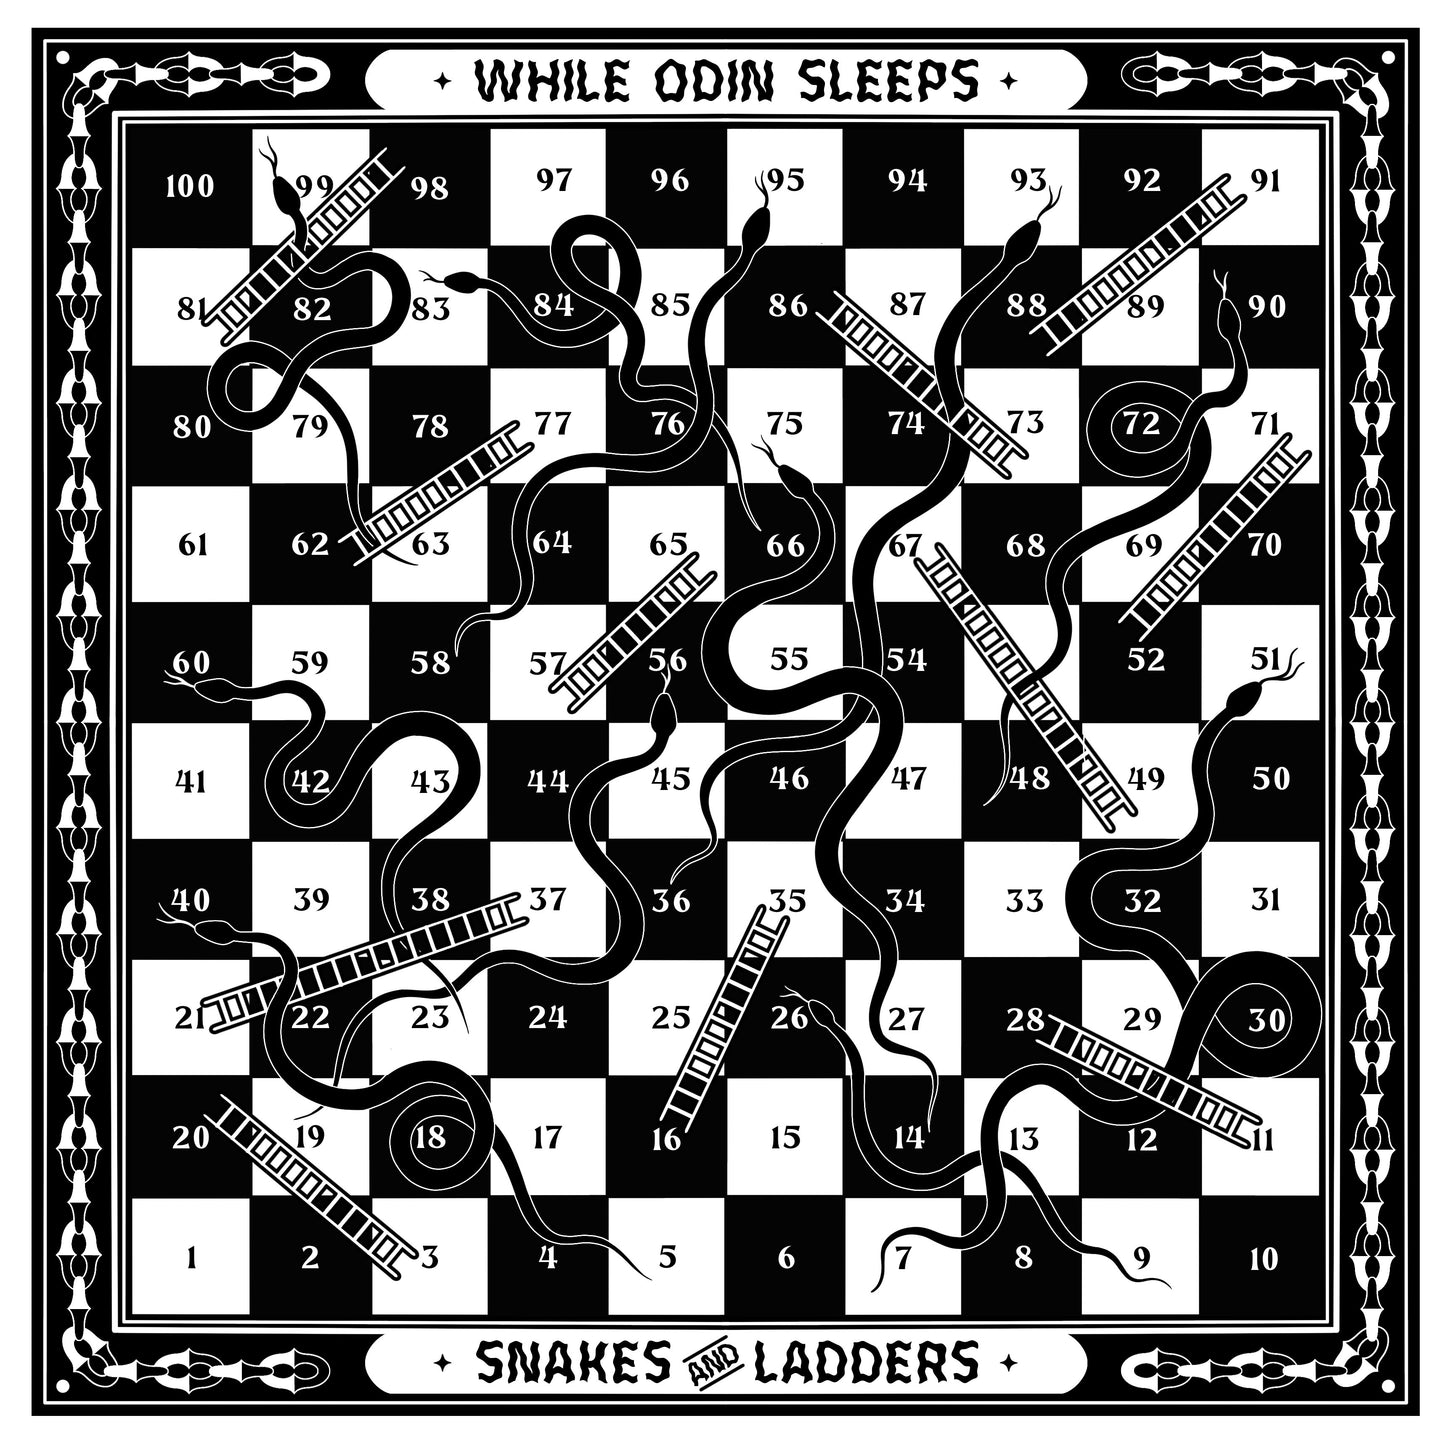 Snakes & Ladders Bandana - While Odin Sleeps